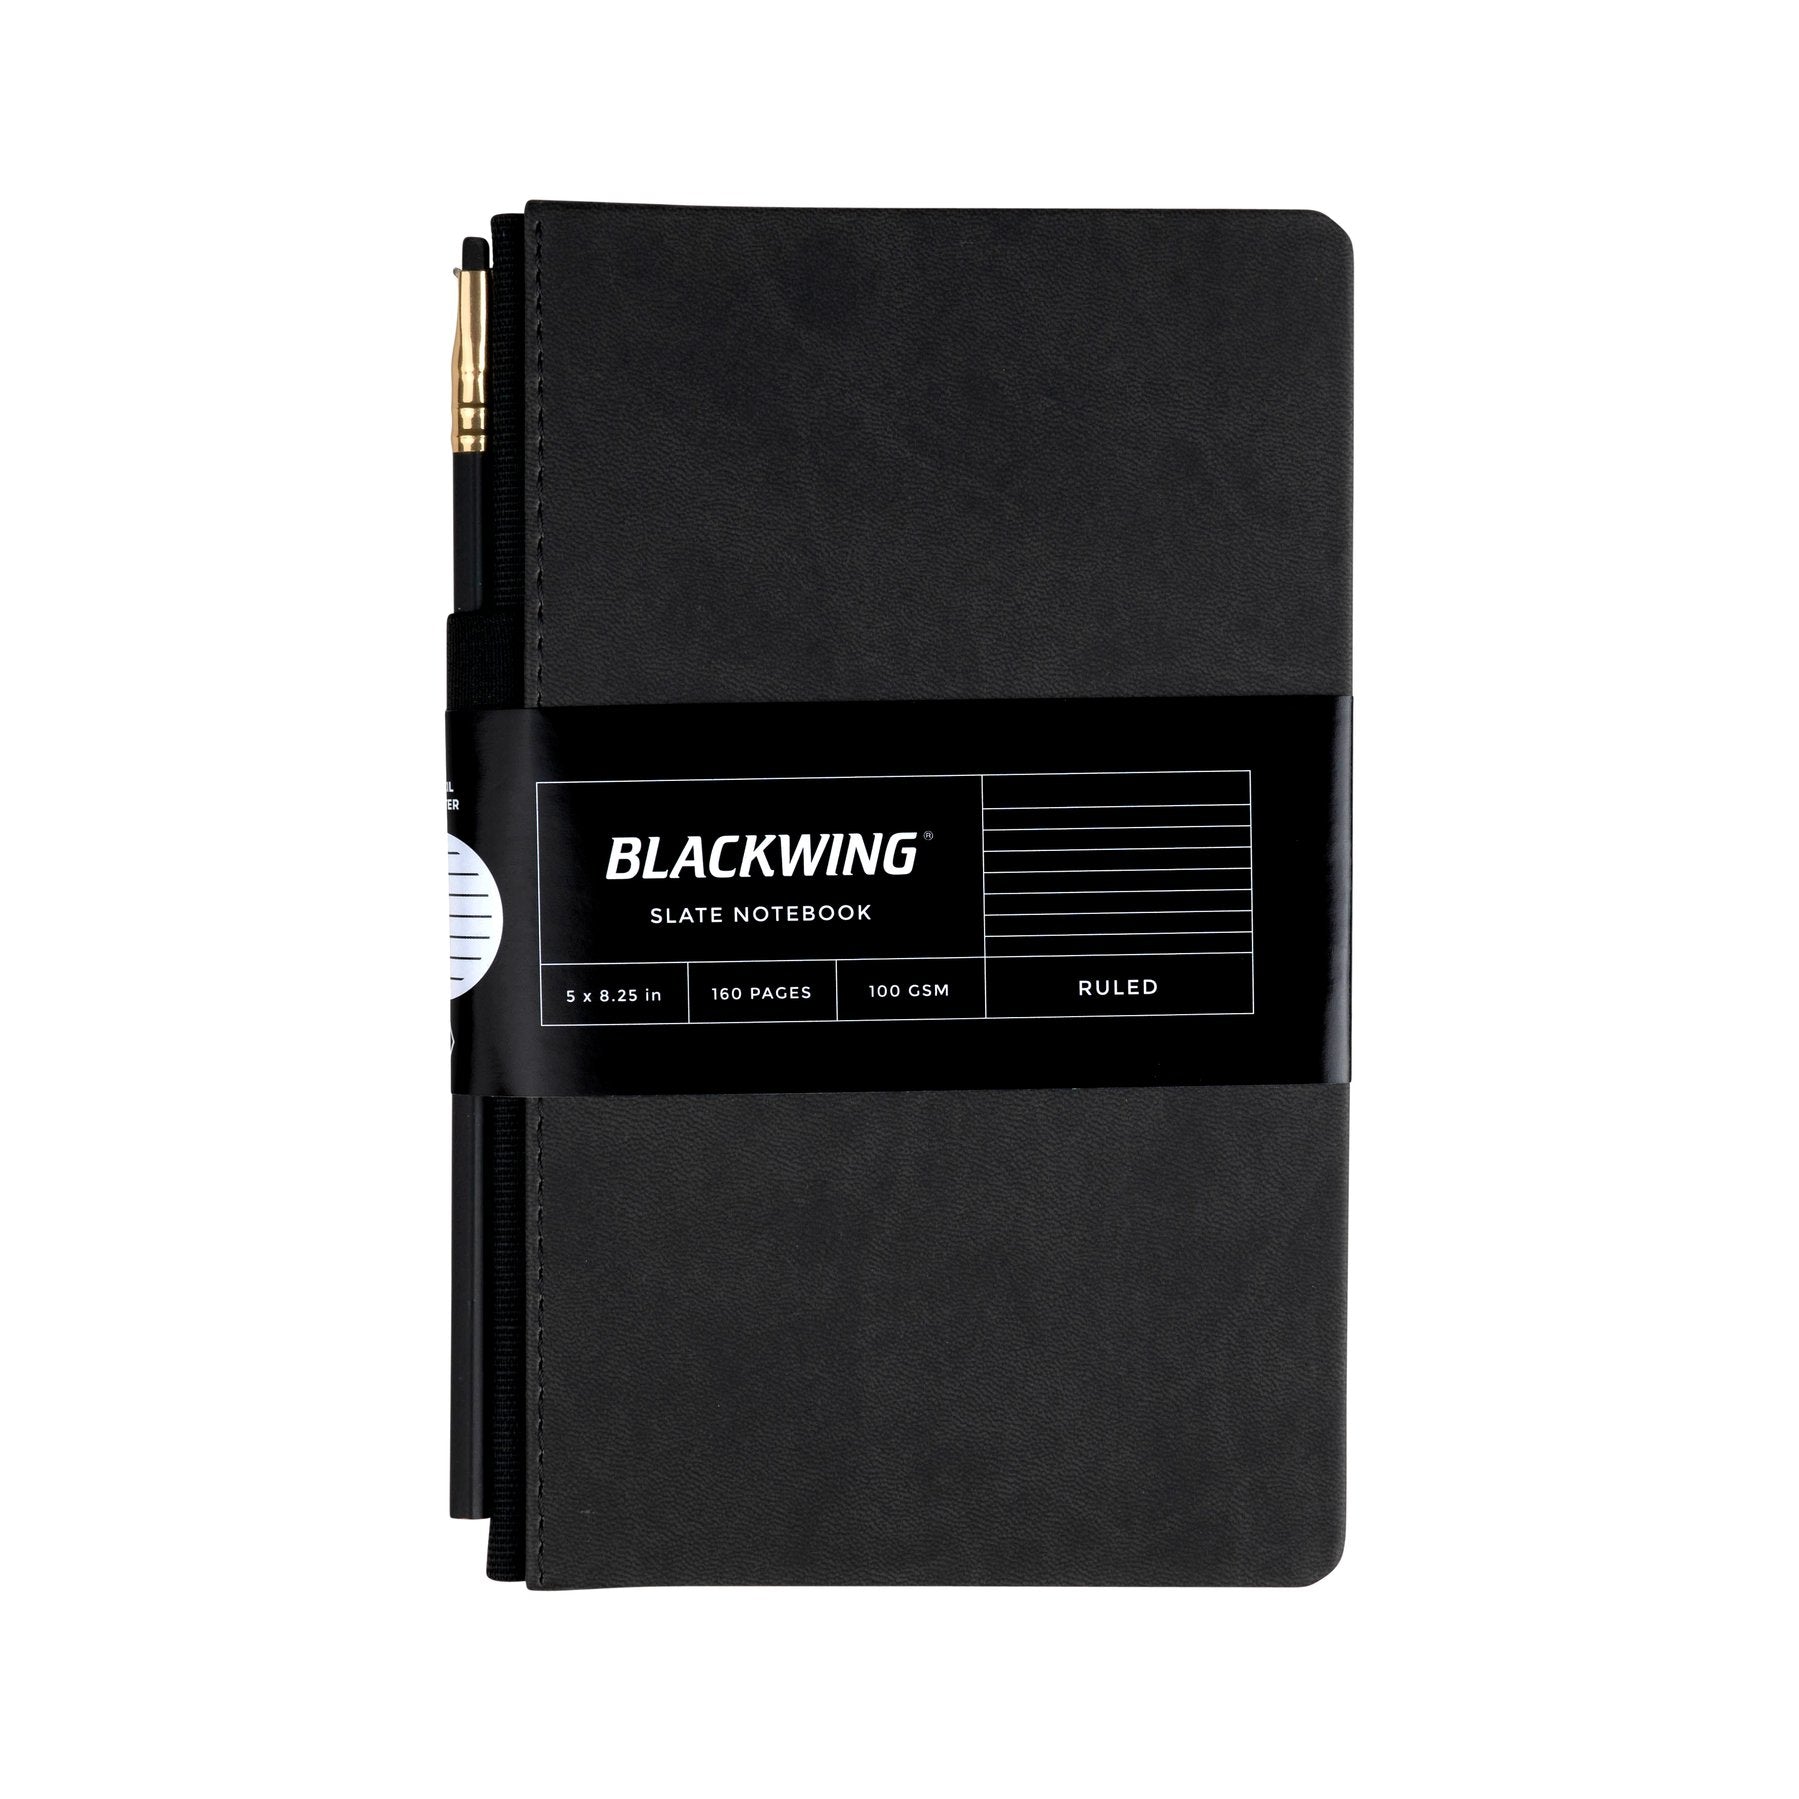 Blackwing Slate Notebooks